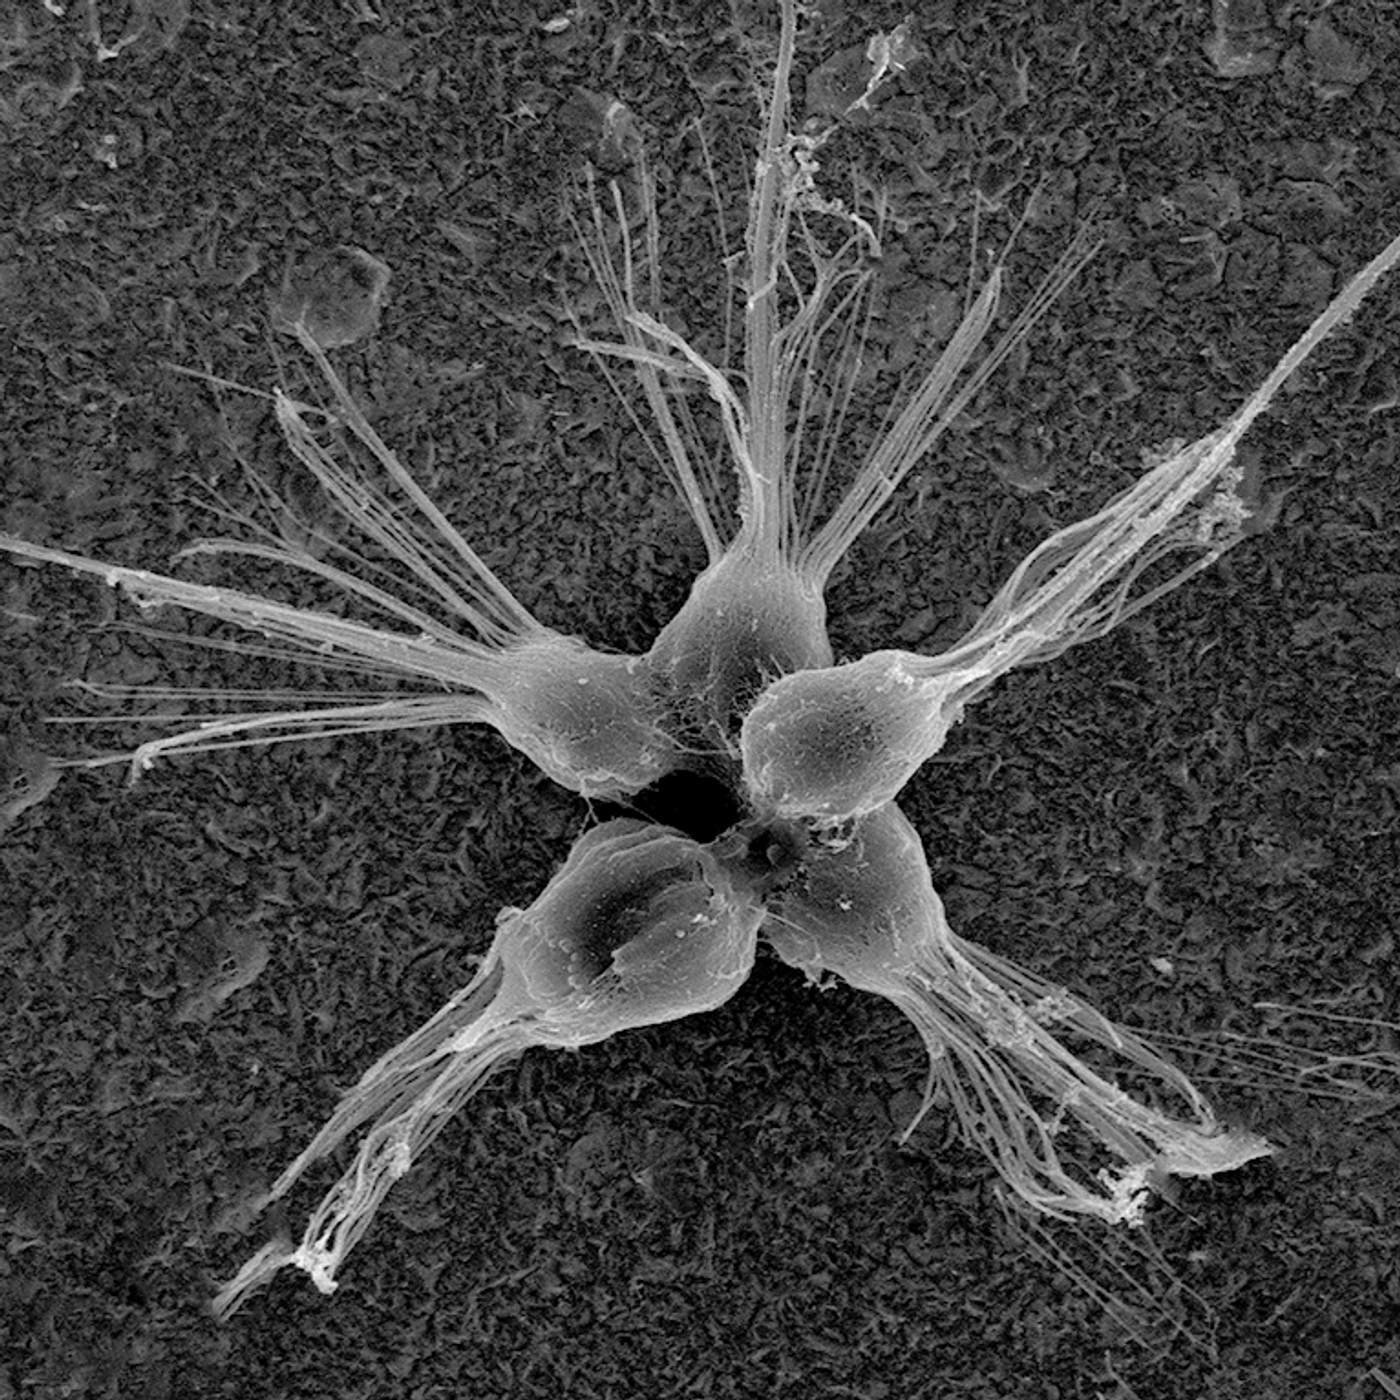 A choanoflagellate rosette colony